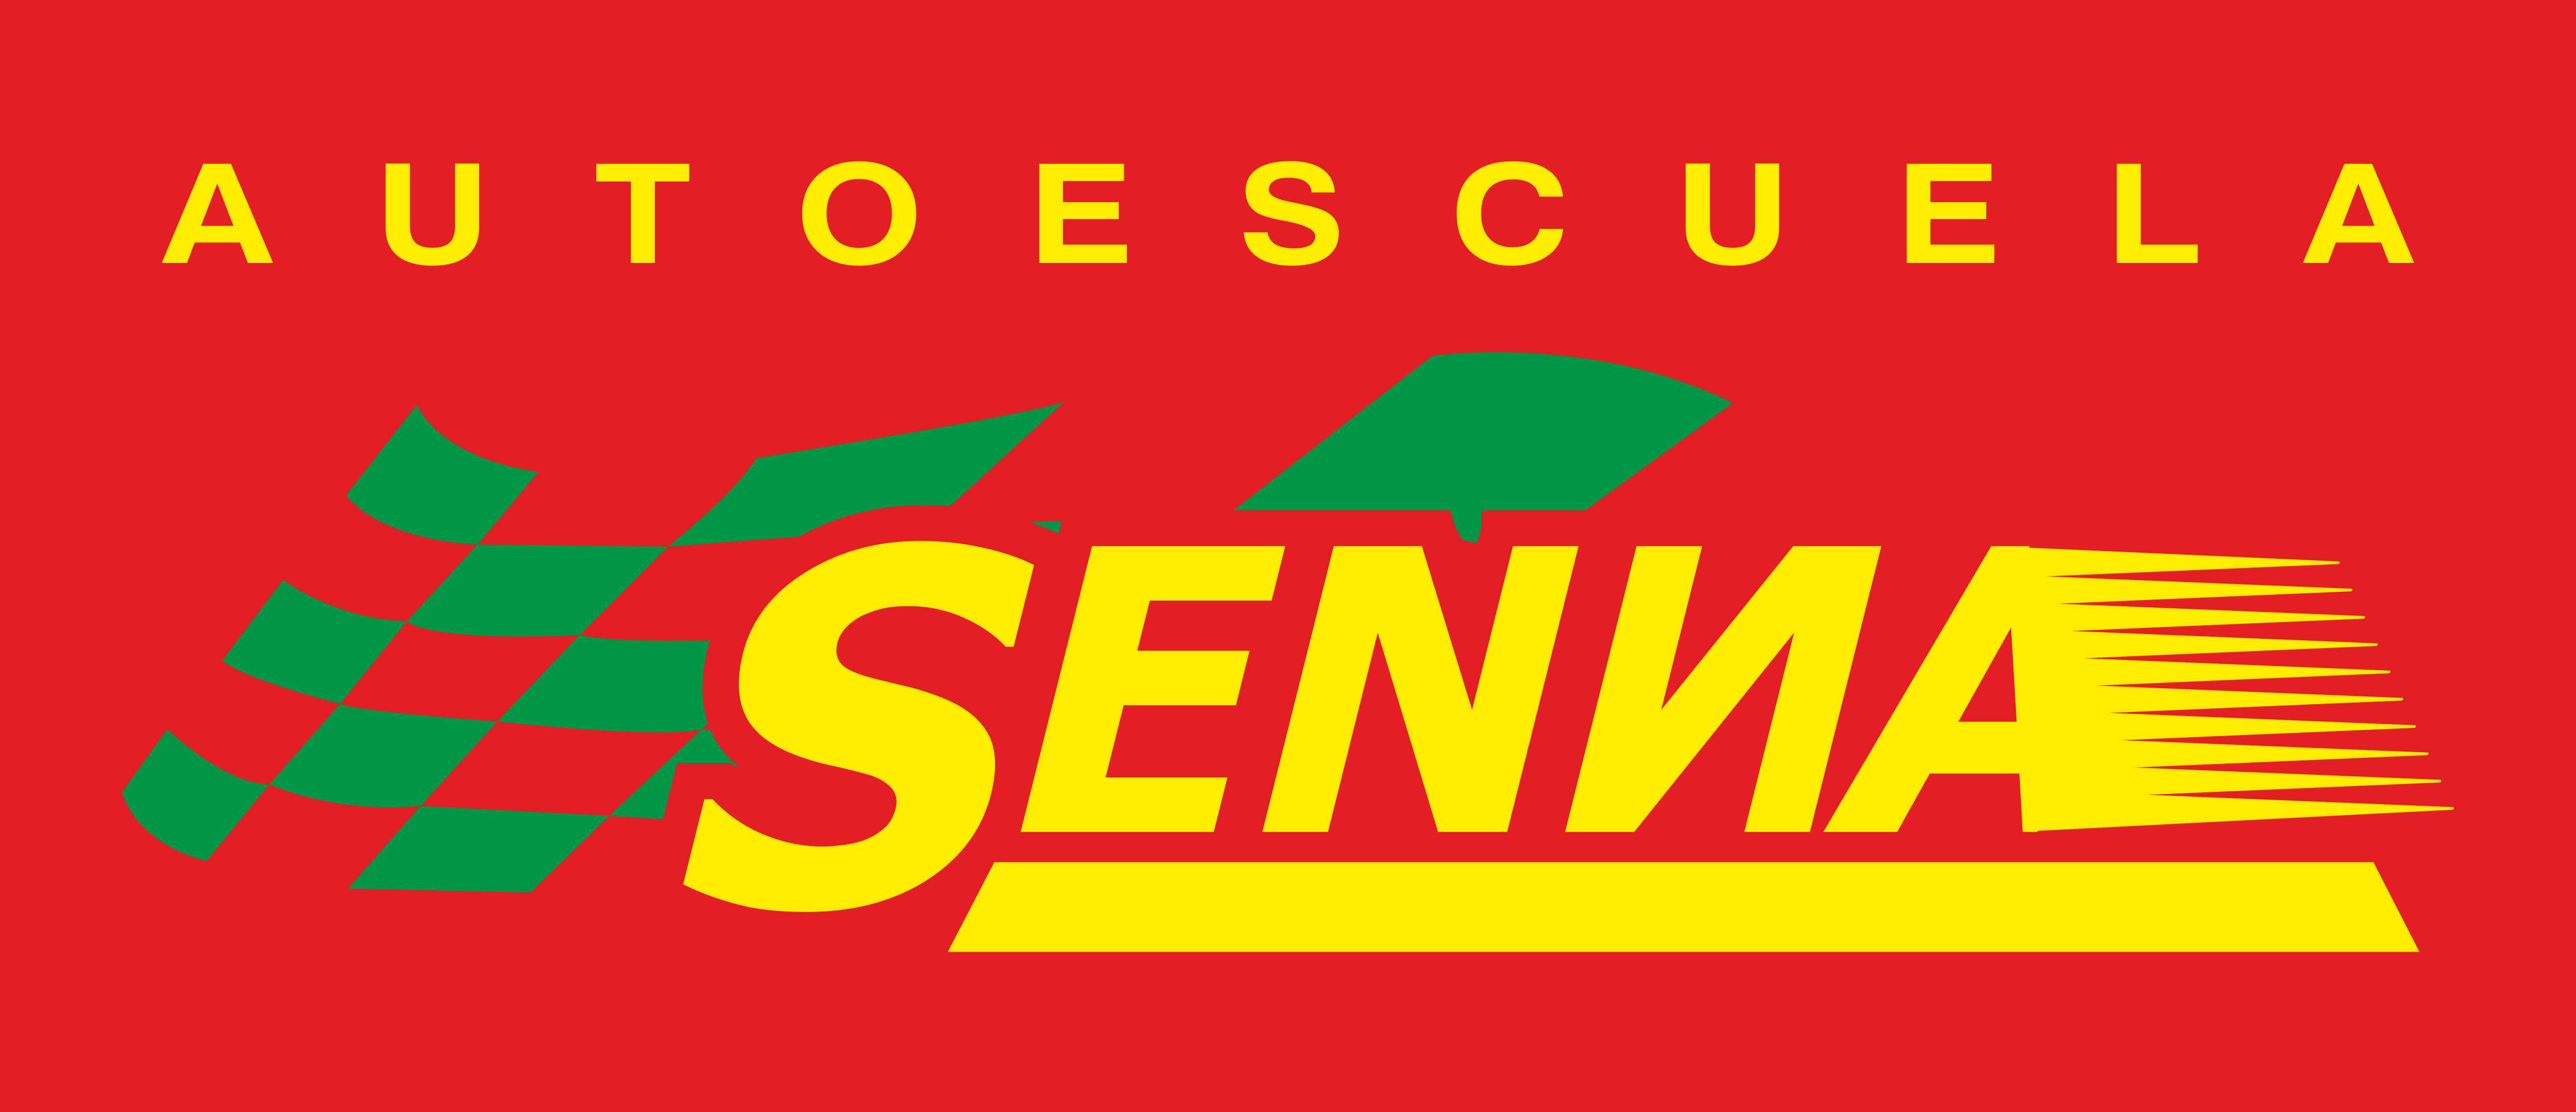 Autoescuela Senna - 